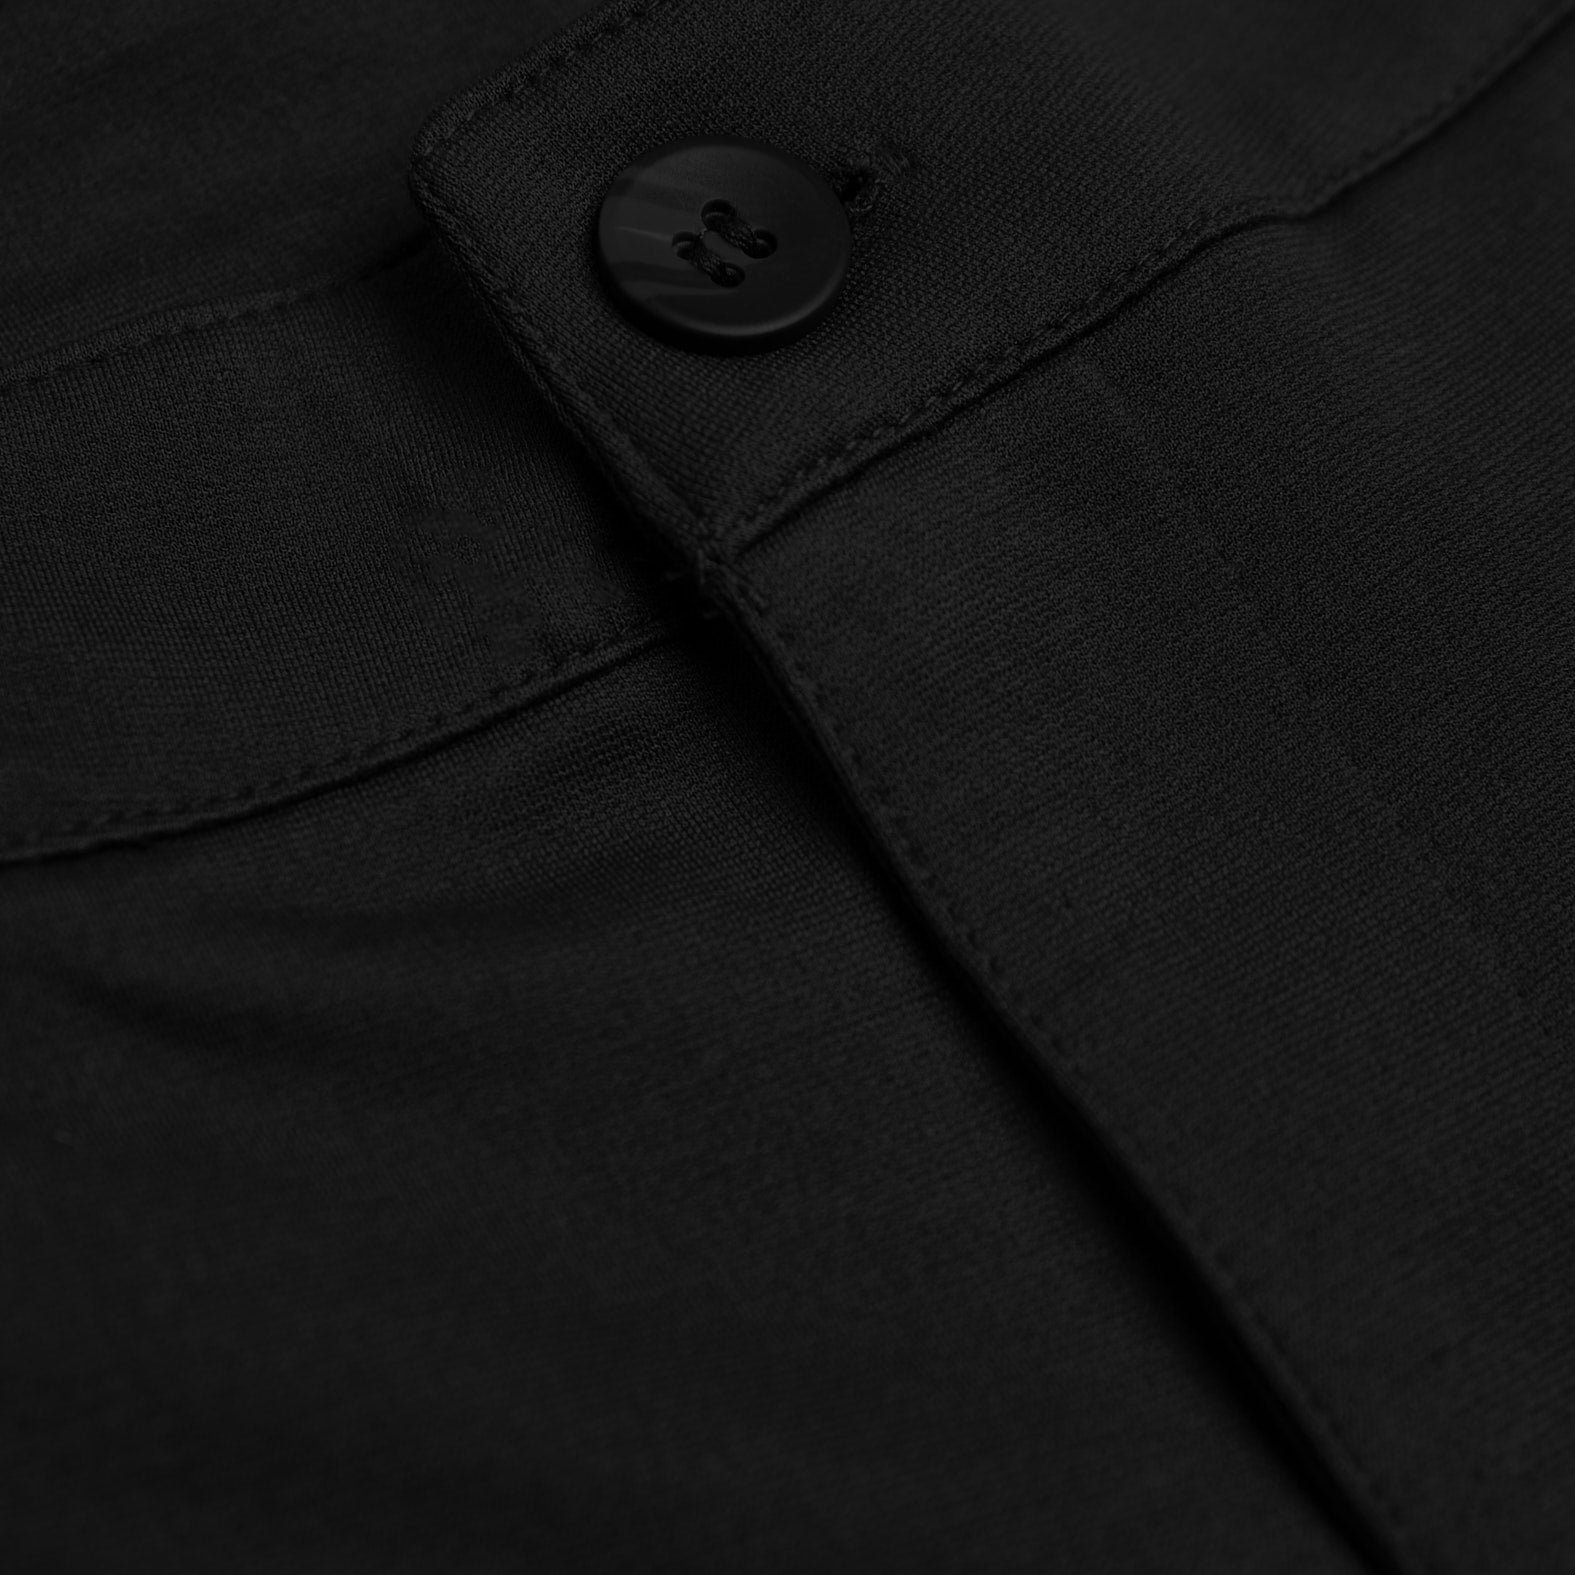 9.5" Black and Navy Chino Shorts 2-Pack